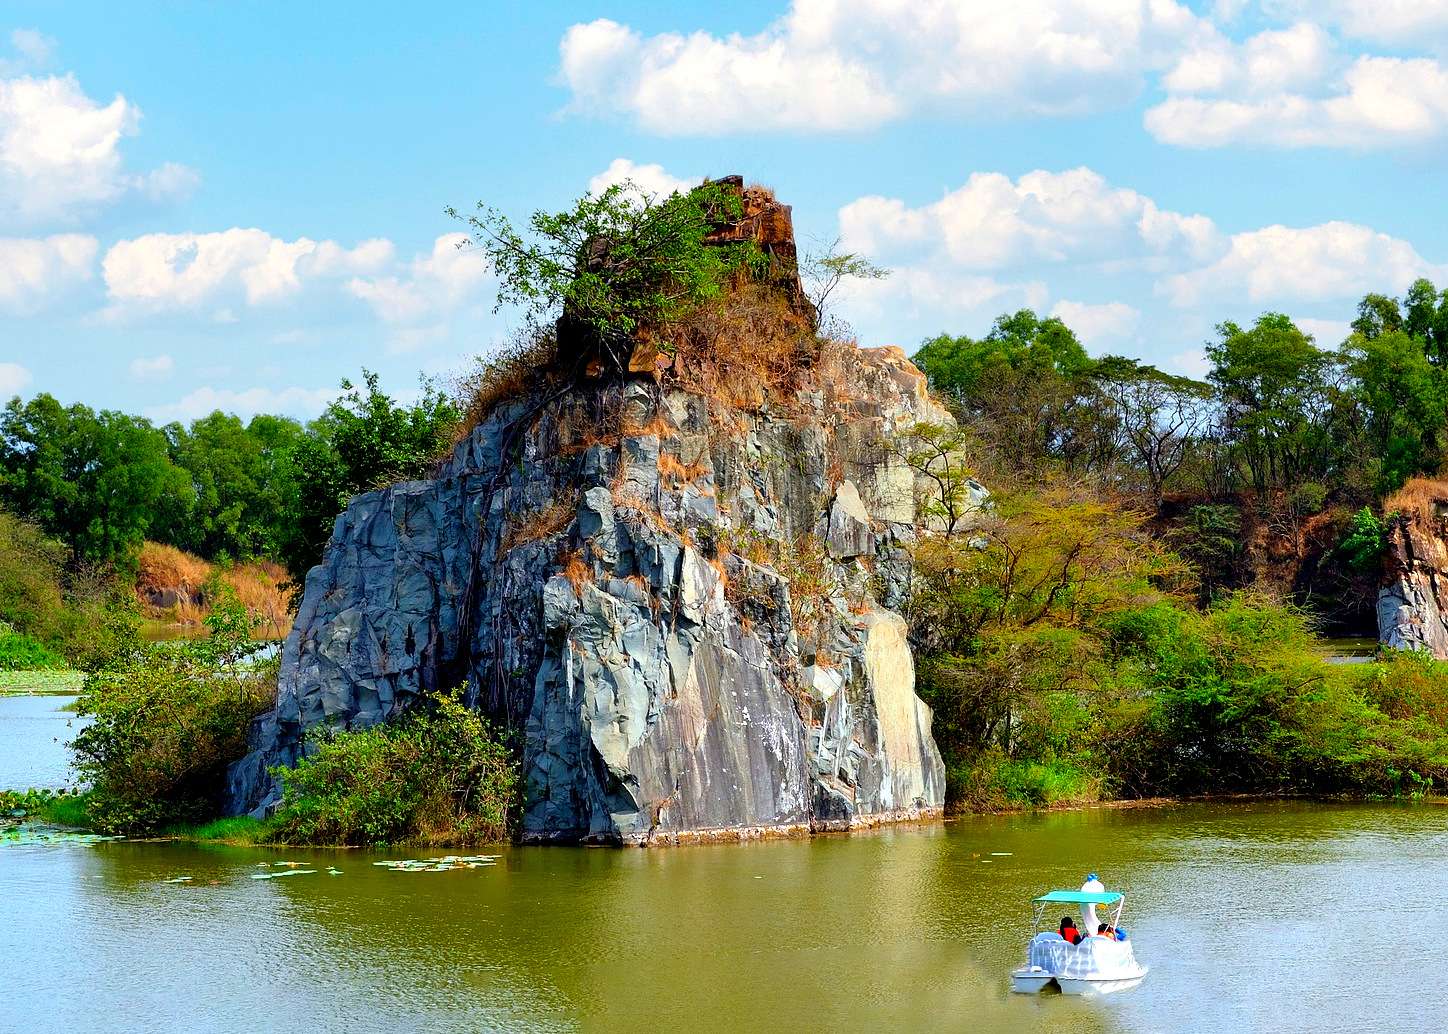 Lake in Vietnam (Buu Long region) online puzzle